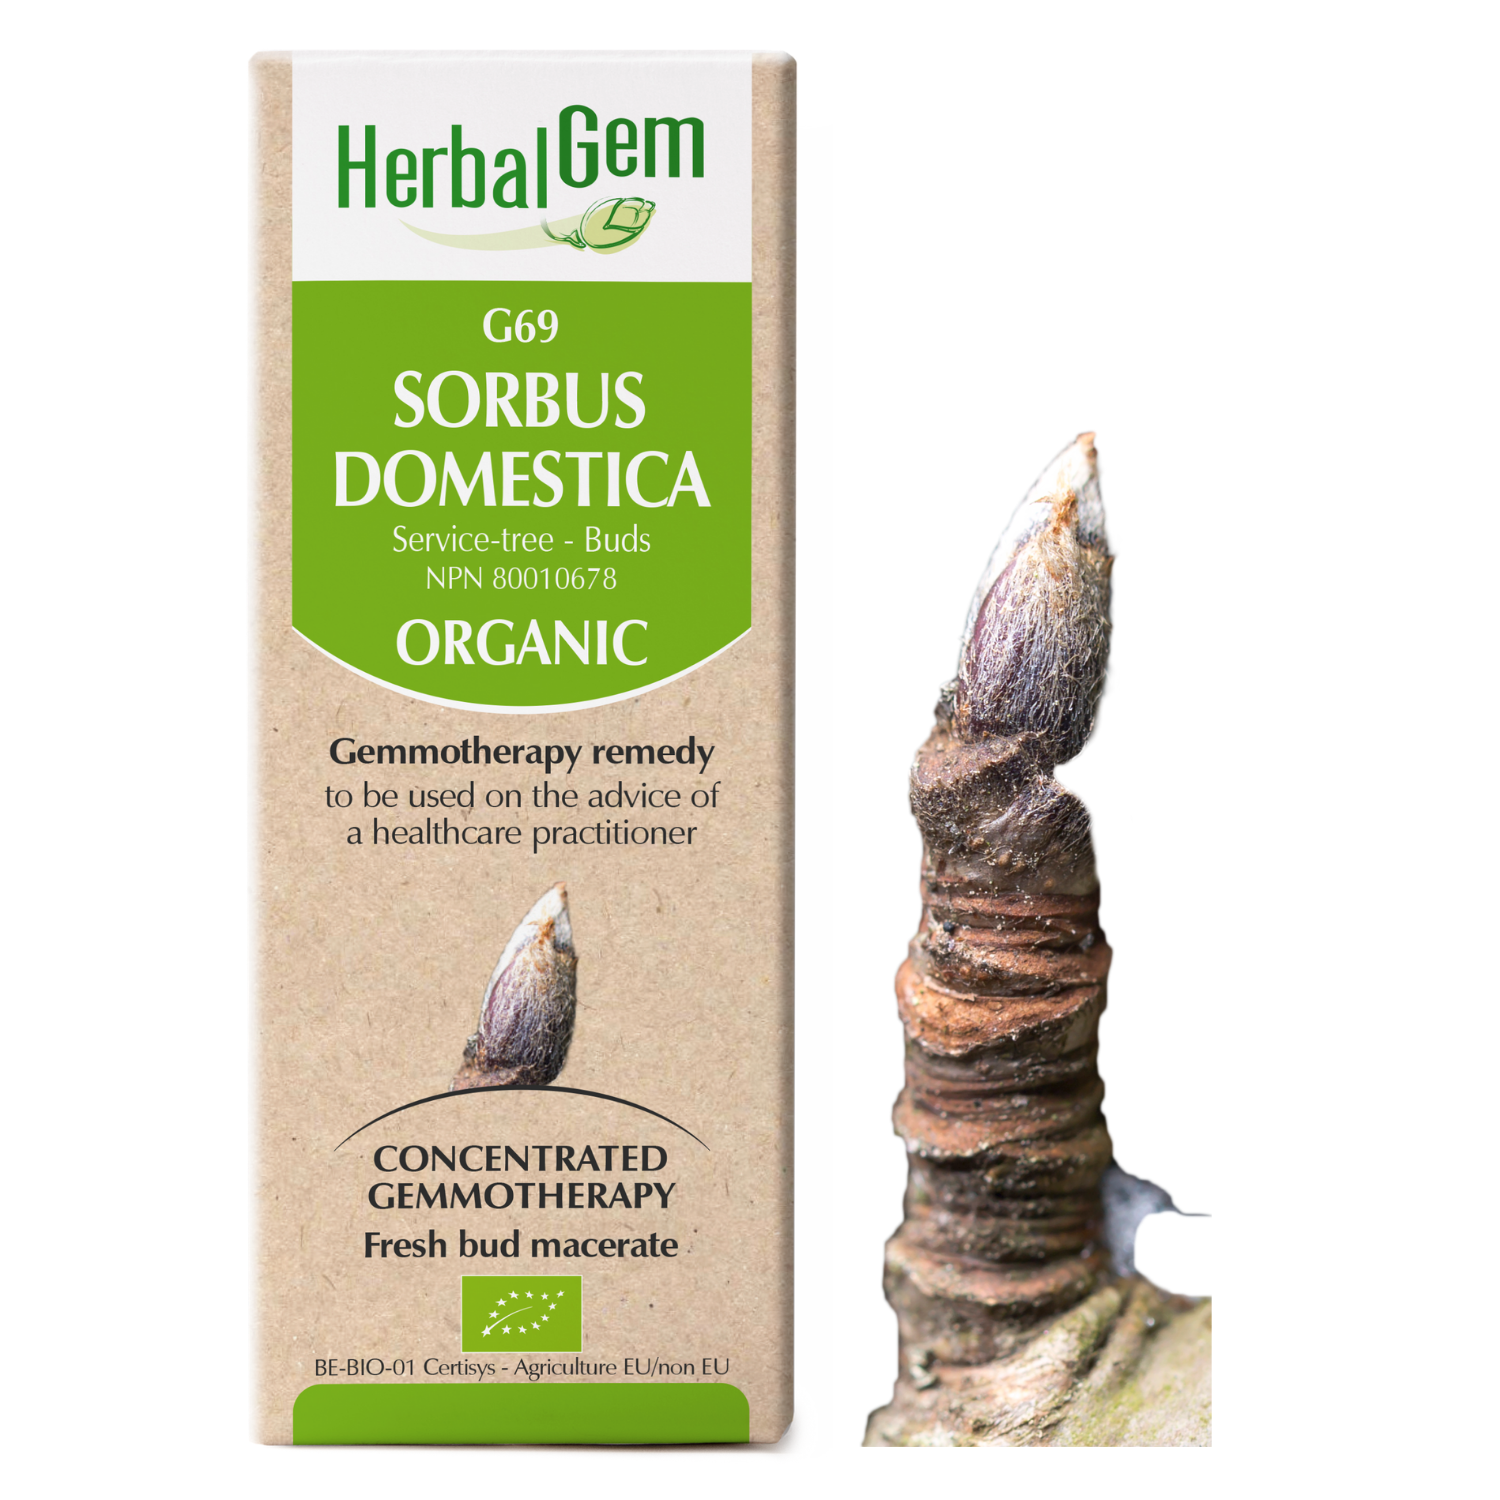 G69 Sorbus domestica, Gemmotherapy, Organic, Service-tree Buds, 50ml